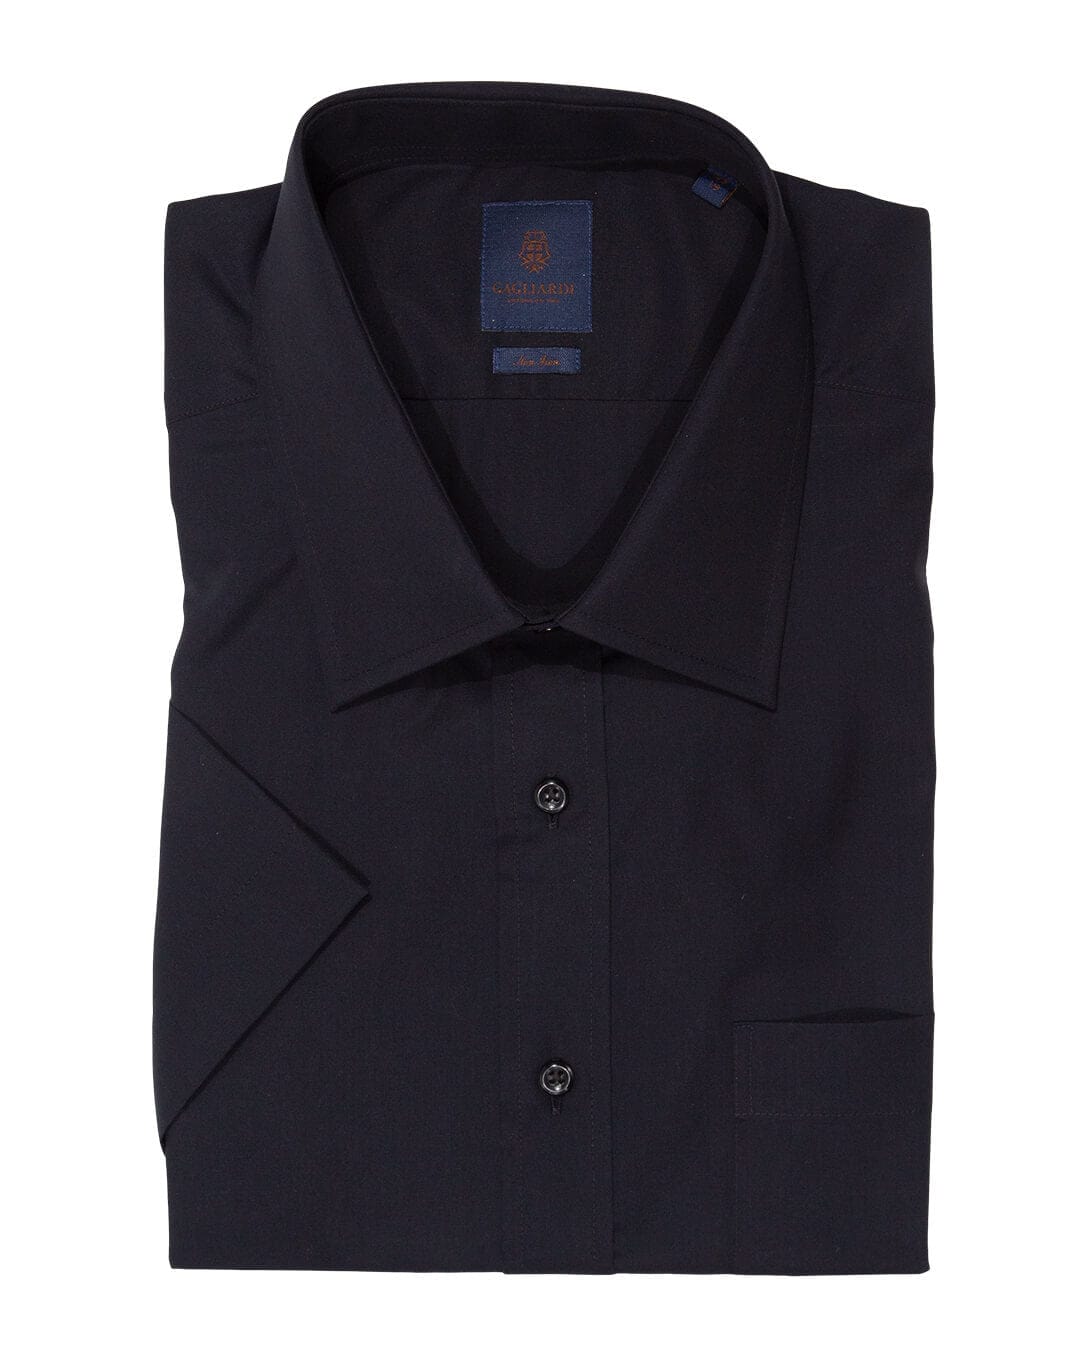 Gagliardi Shirts Gagliardi Tailored Fit Black Poplin Non Iron Button-Down Short Sleeve Shirt